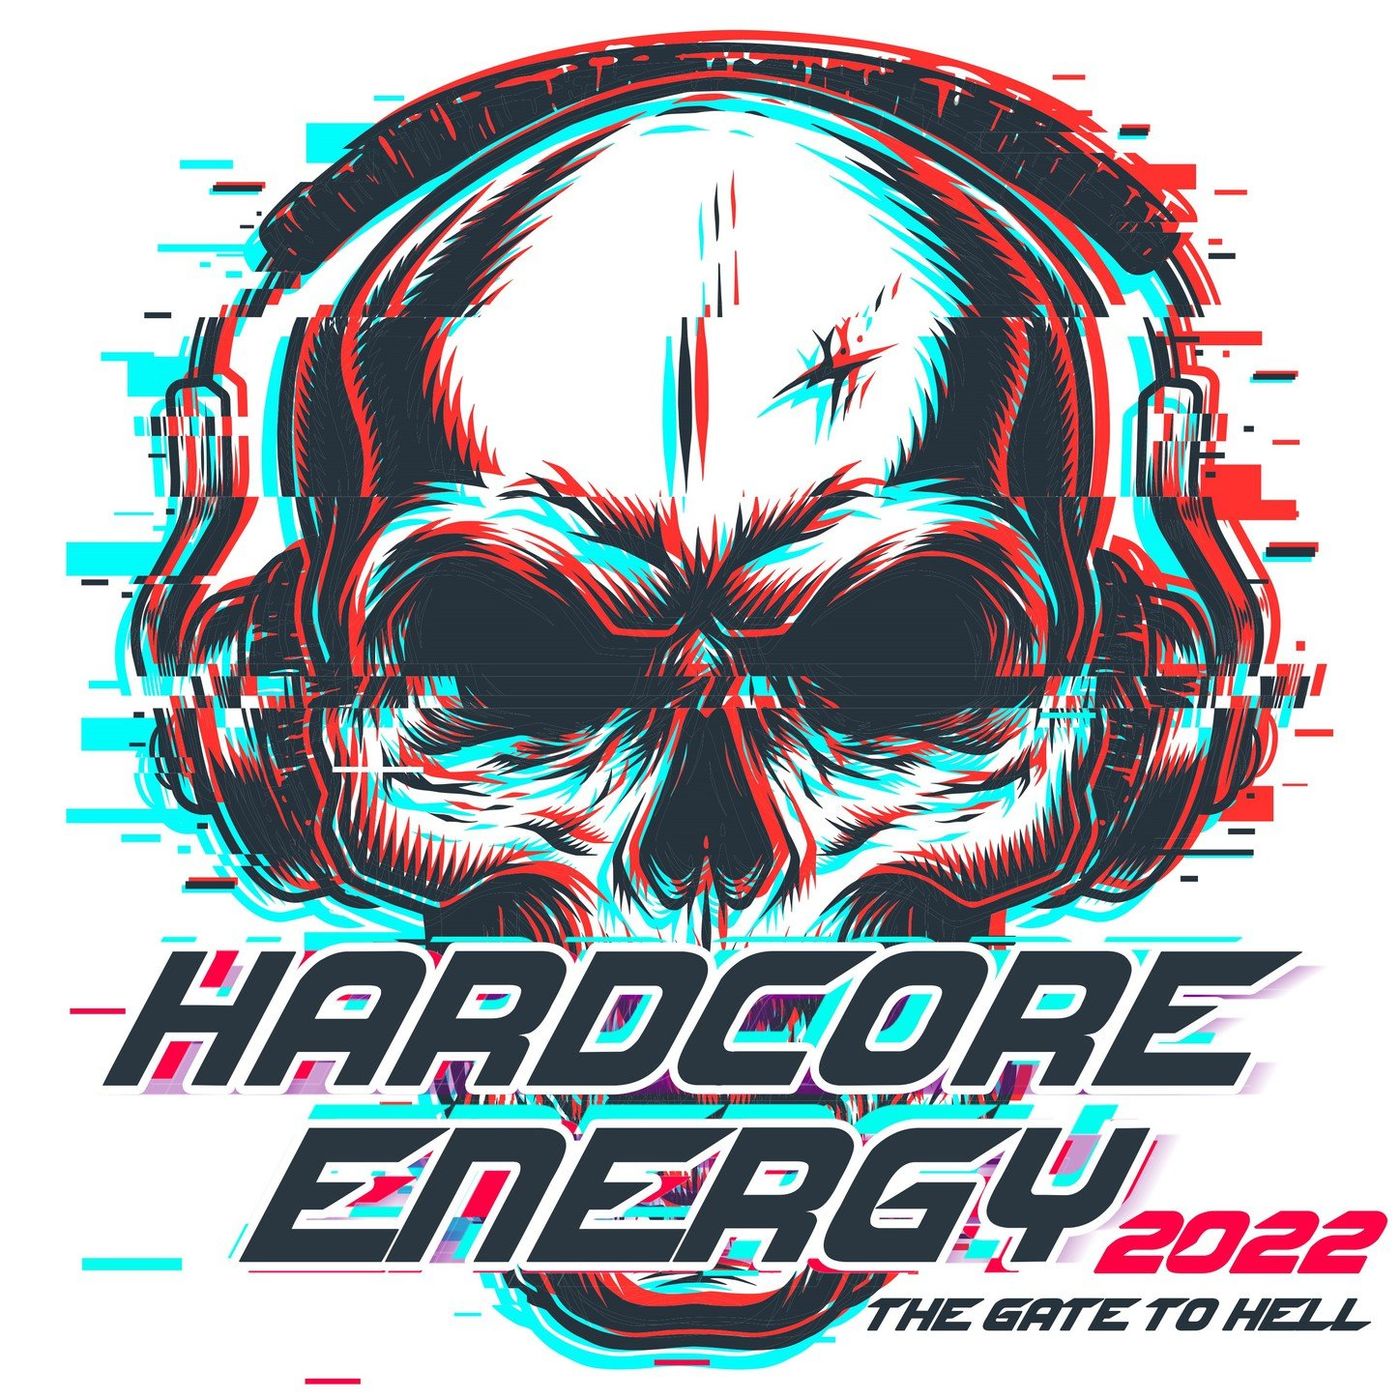 VA - Hardcore Energy 2022 - The Gate to Hell (2021)